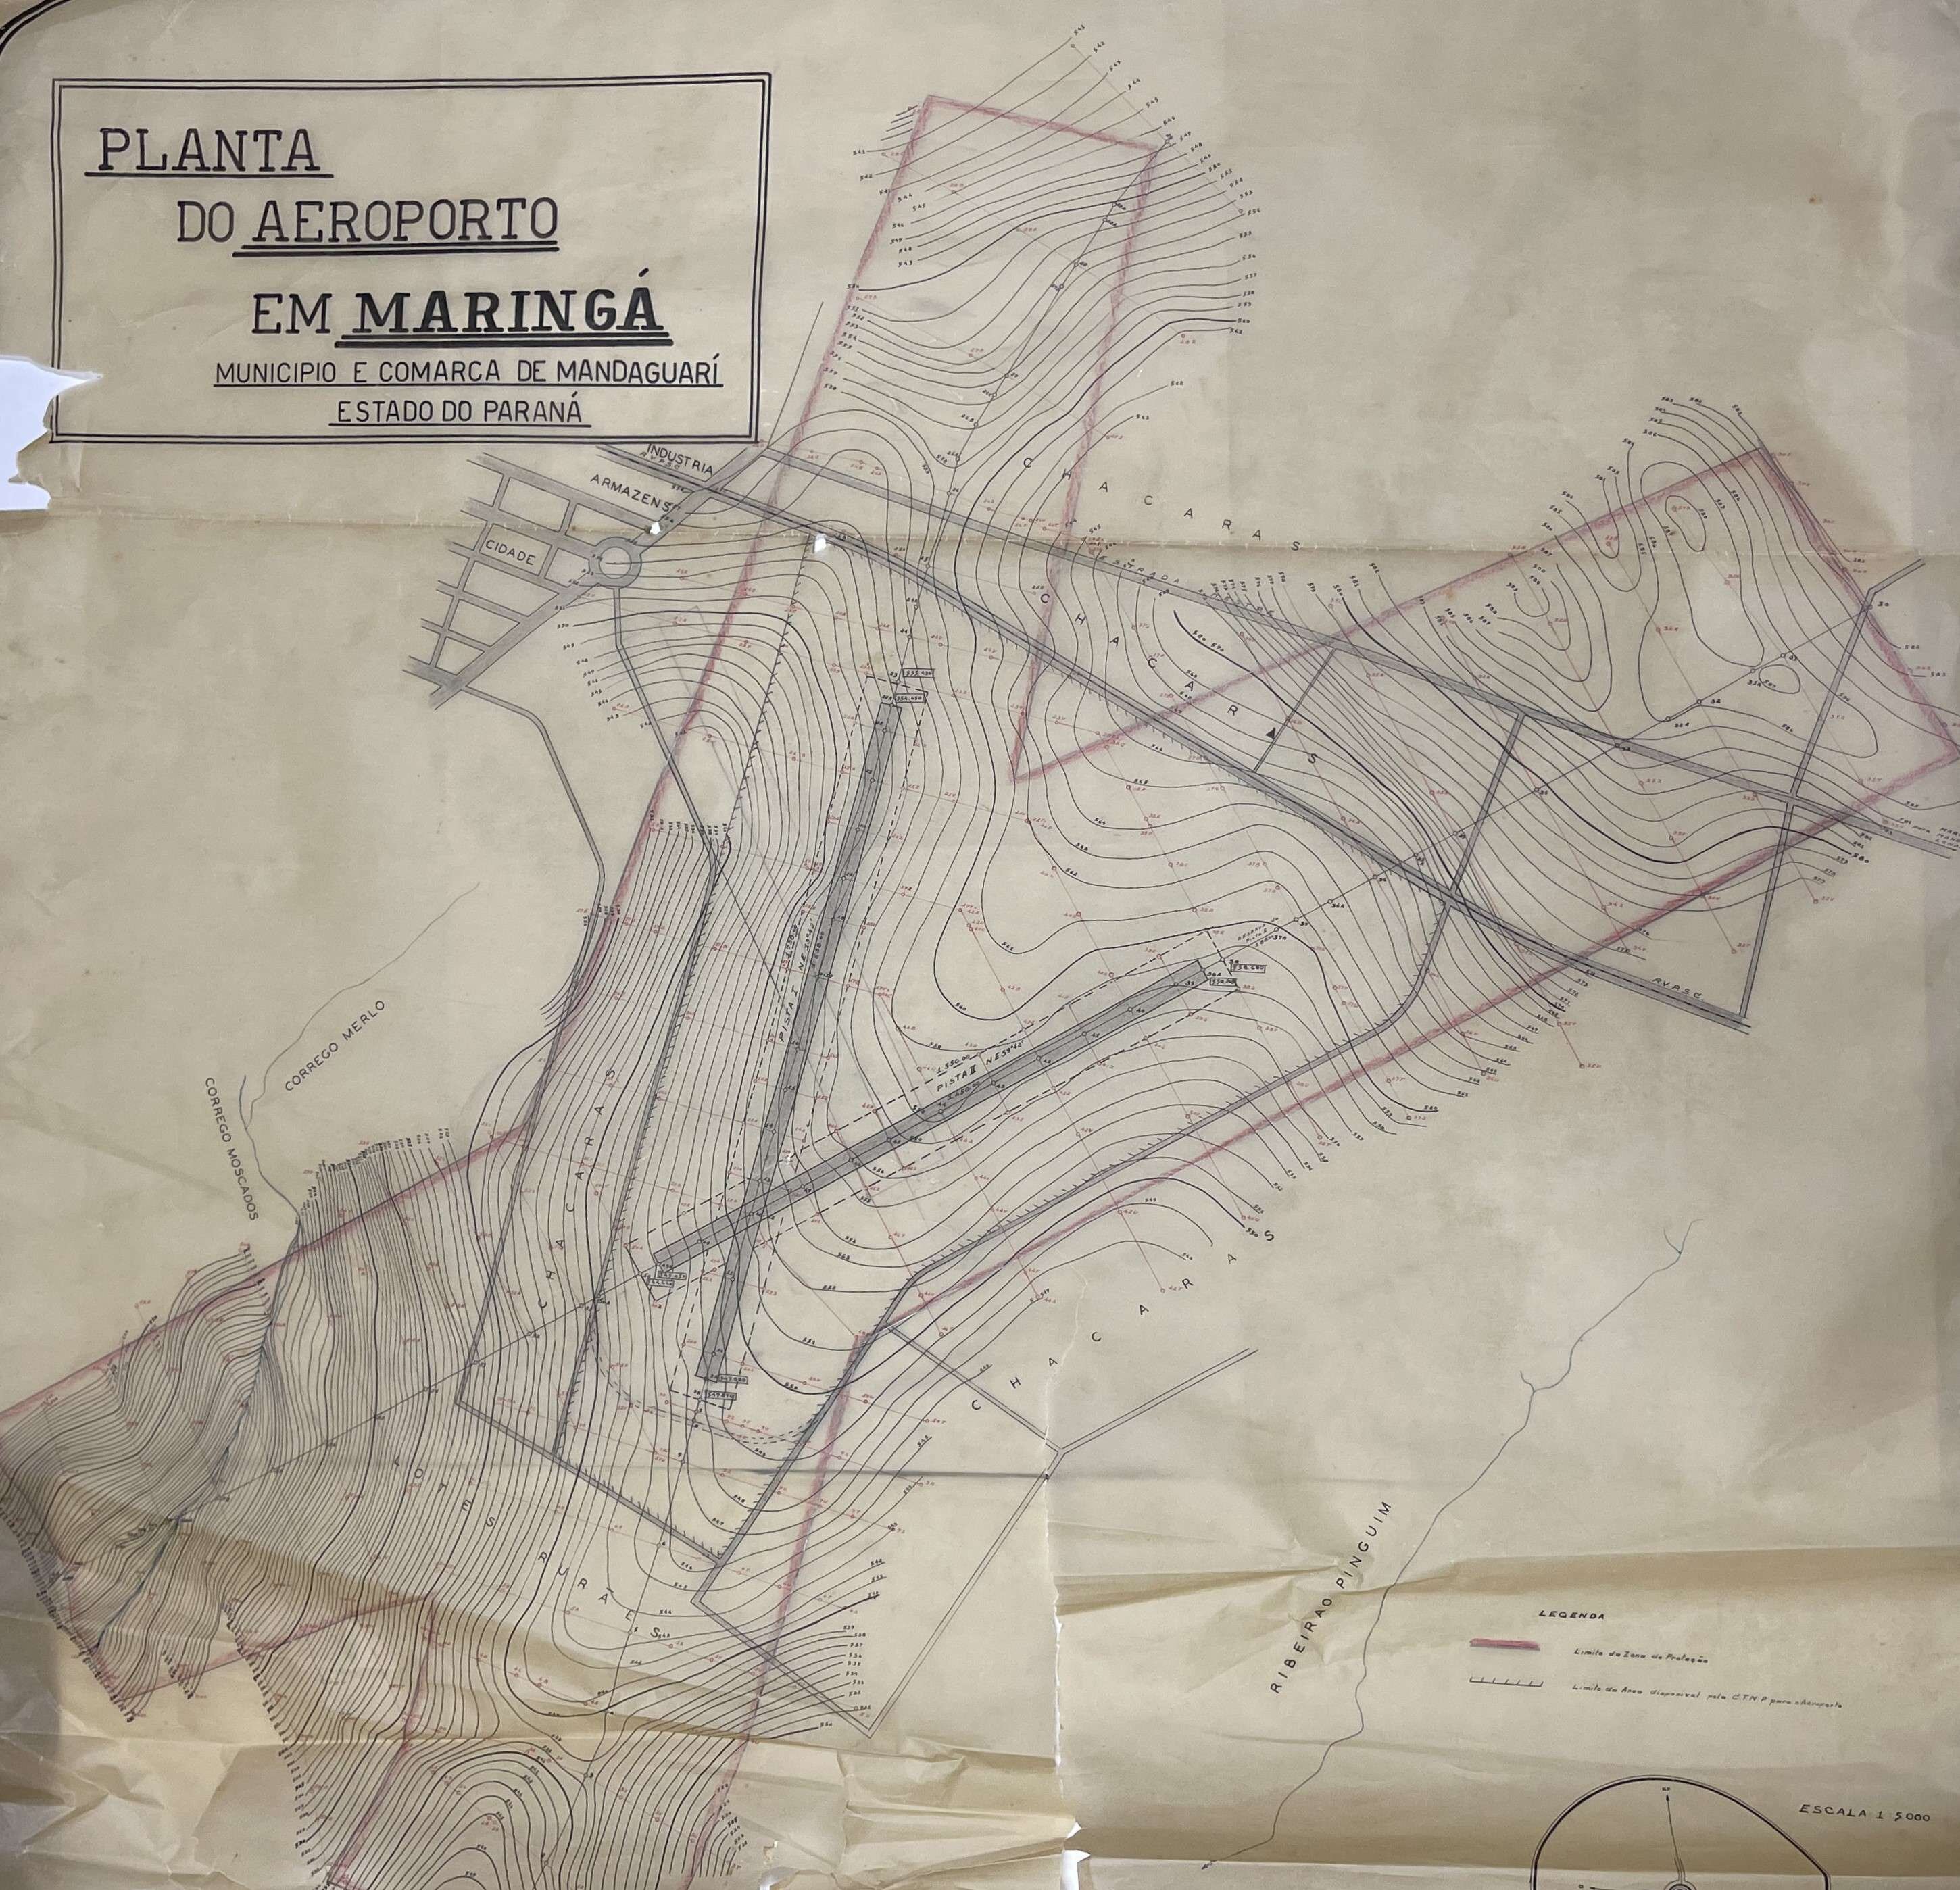 Planta das pistas do aeroporto de Maringá - Década de 1940